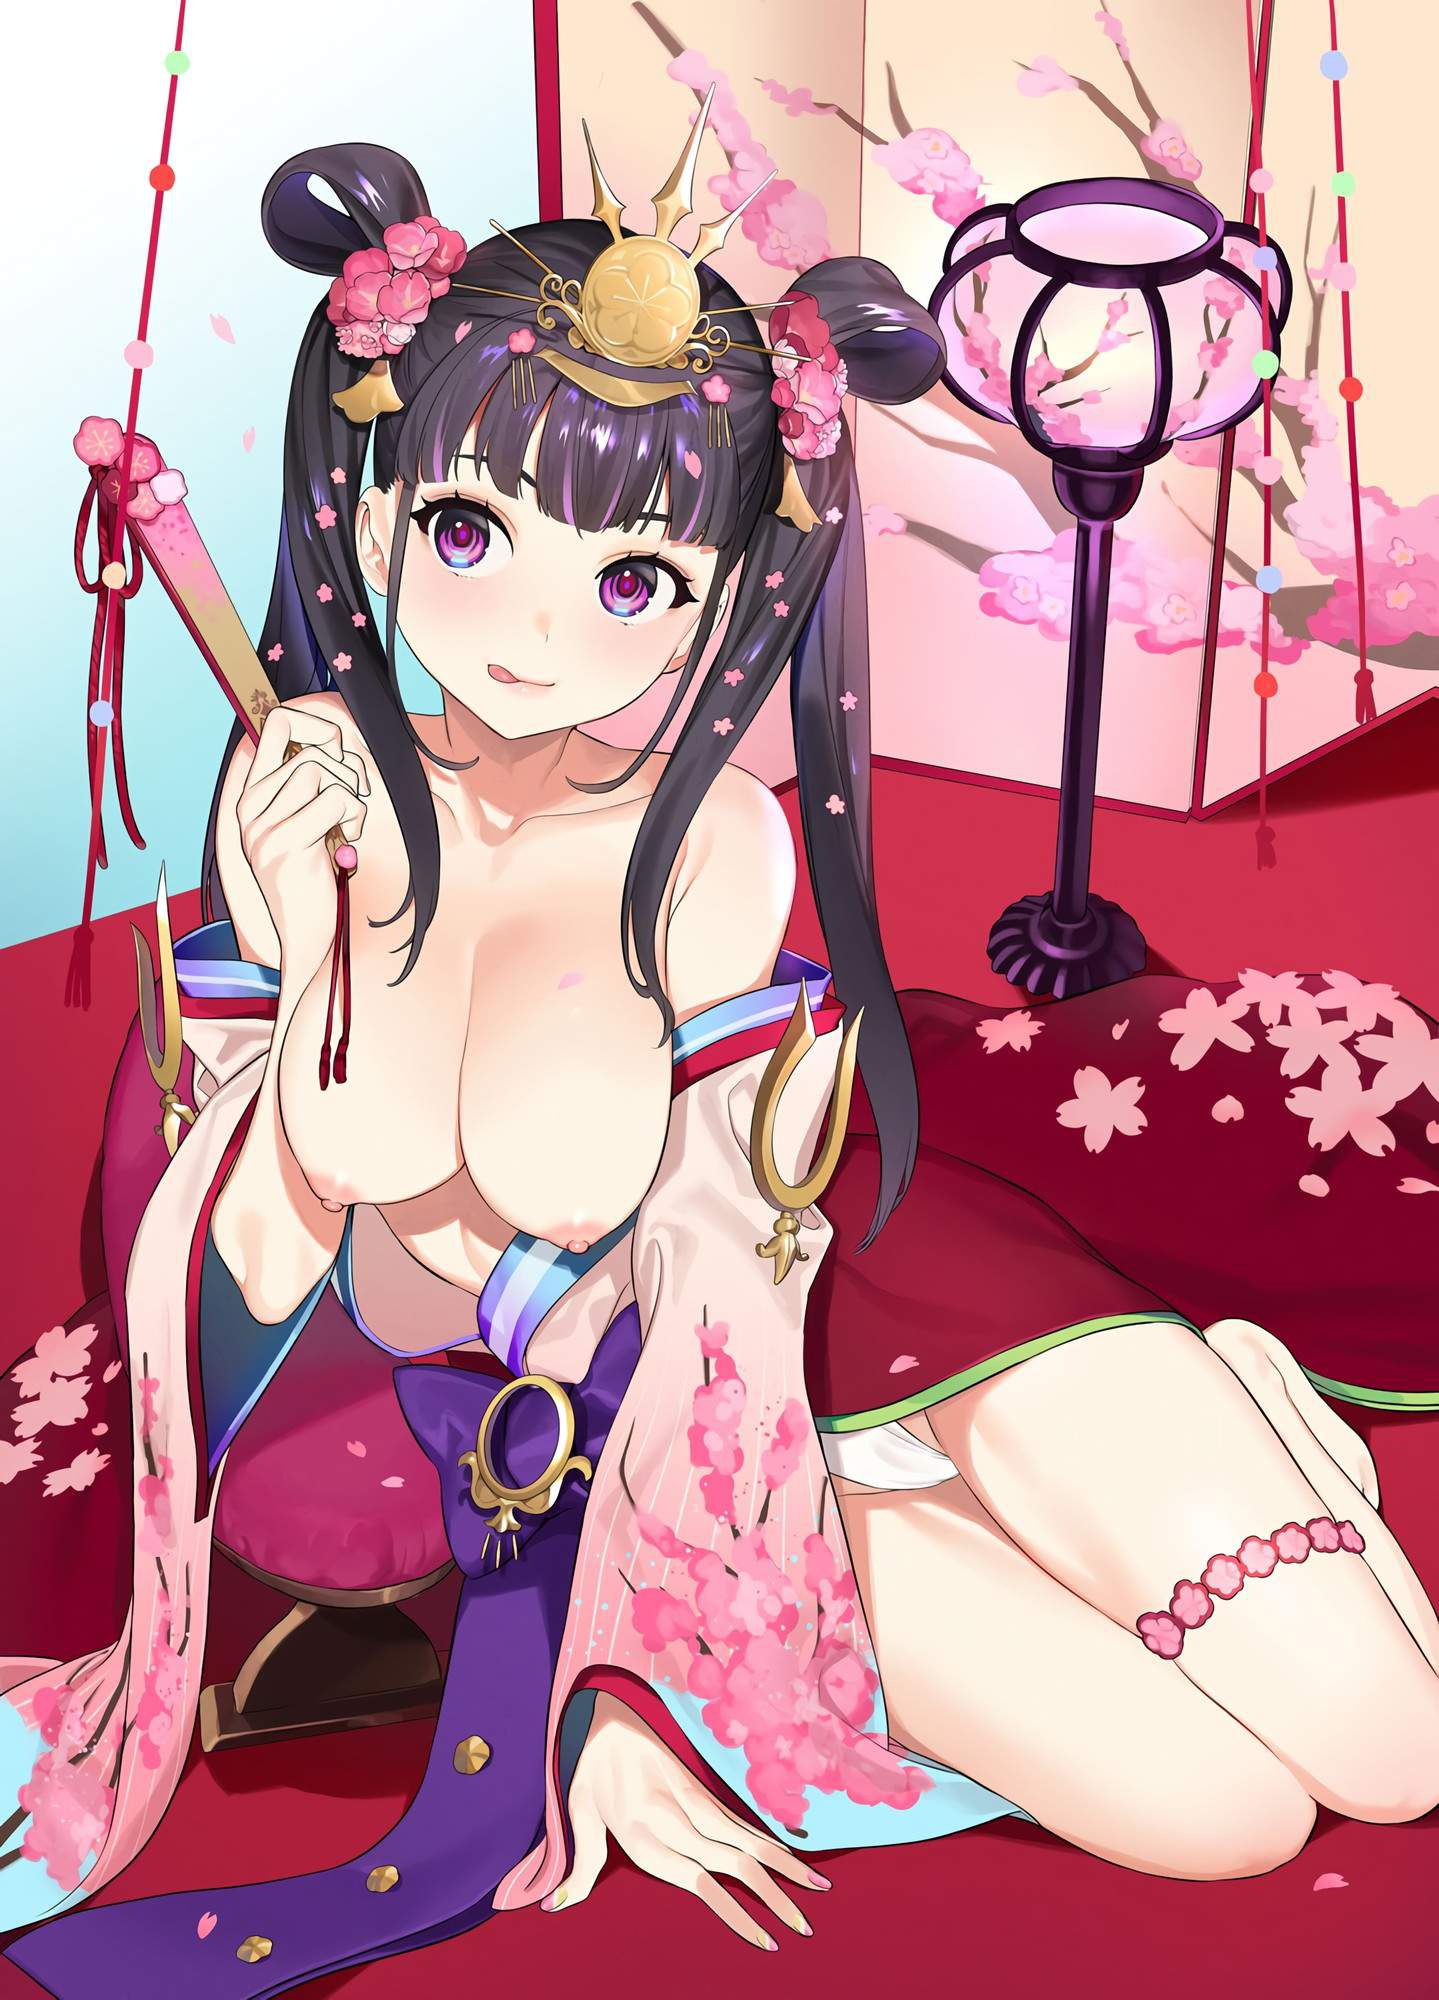 2D erotic image of kimono / yukata. 6